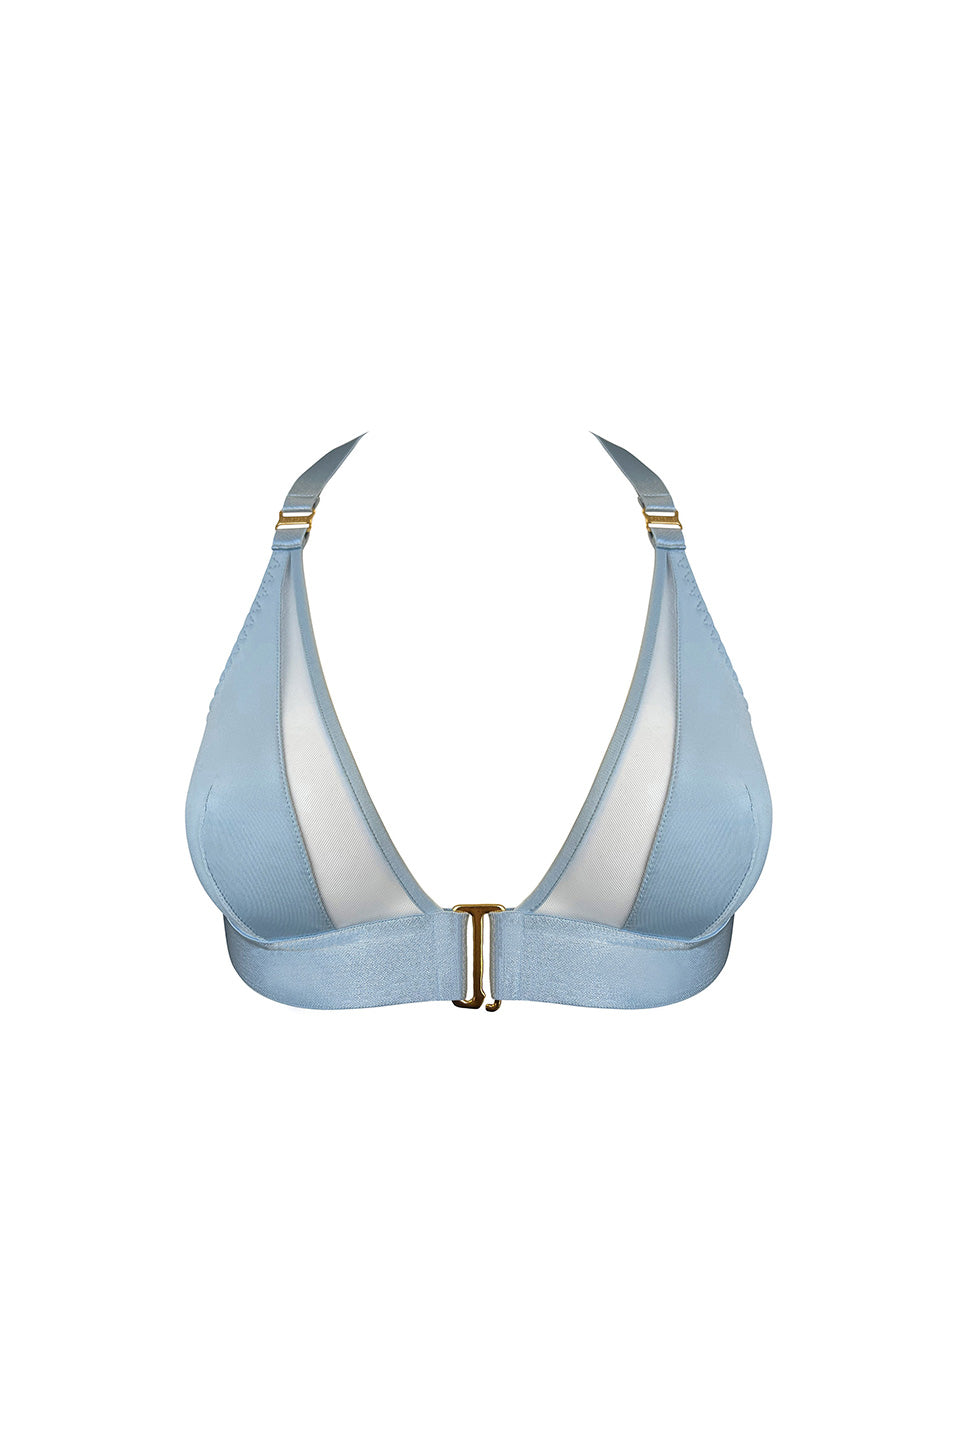 Shop online trendy Blue Bras from Bordelle Fashion designer. Product gallery 1